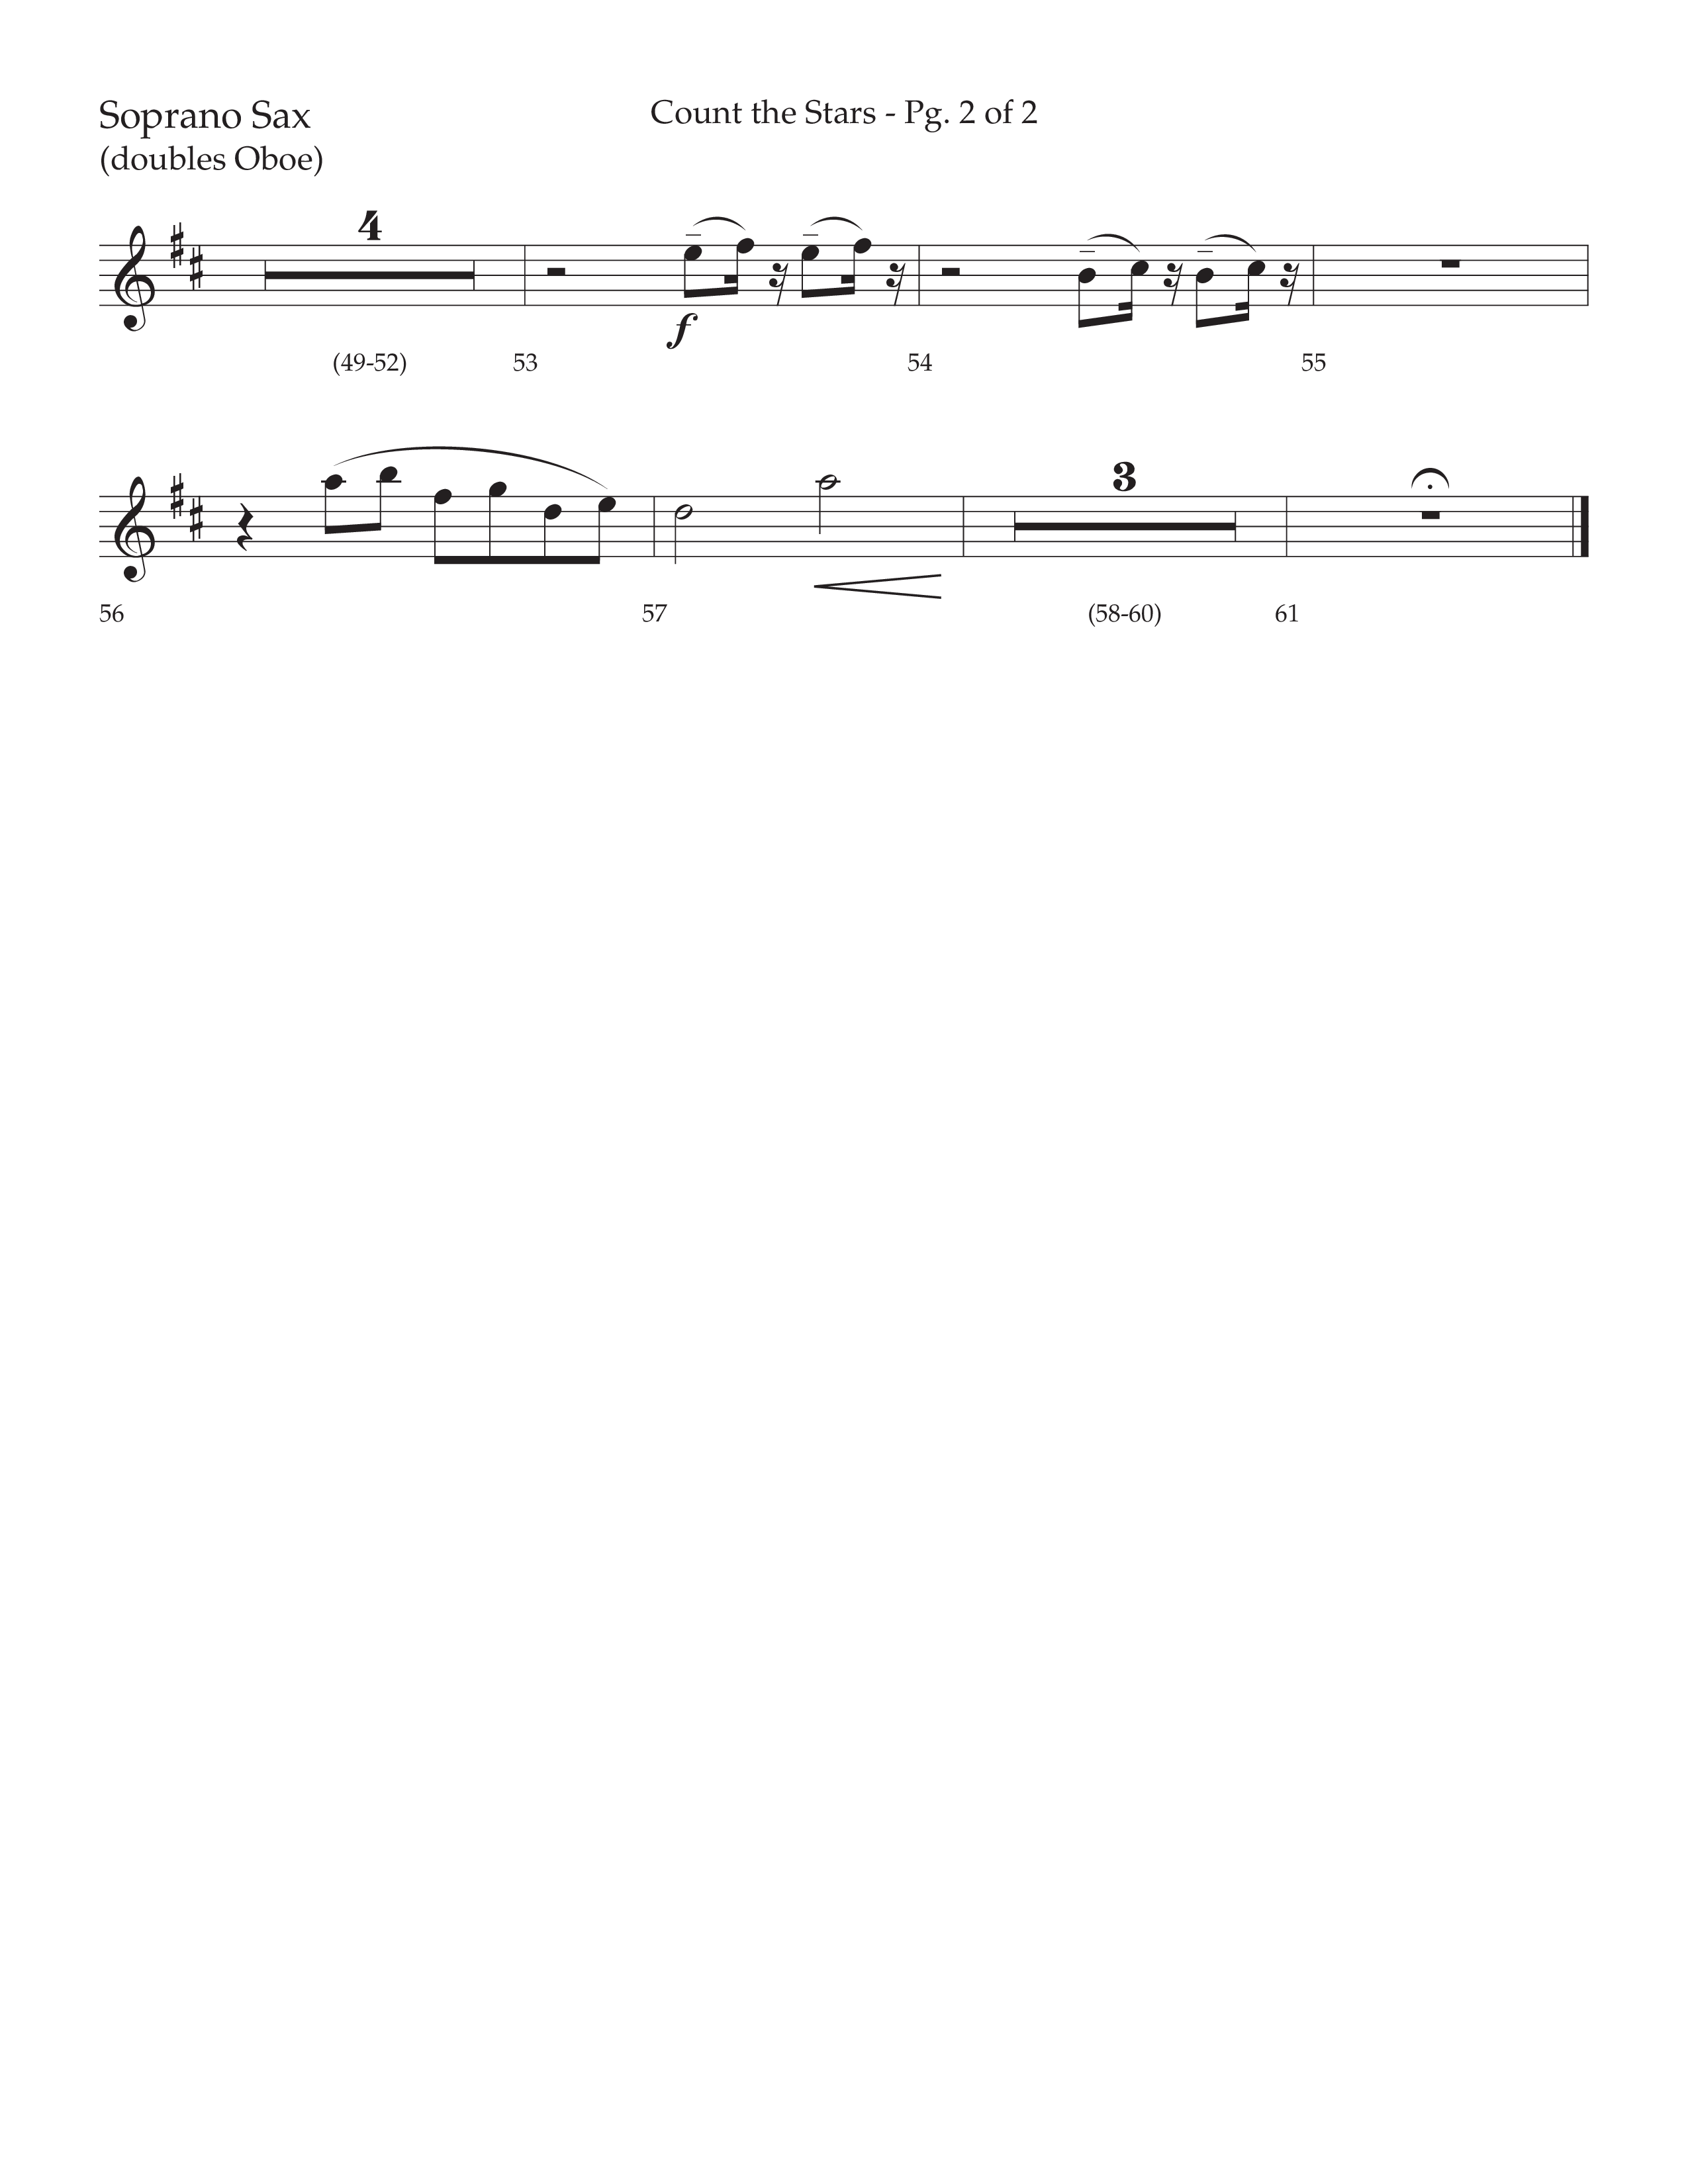 Count The Stars (Choral Anthem SATB) Soprano Sax (Lifeway Choral / Arr. Phillip Keveren / Arr. Kent Hooper)